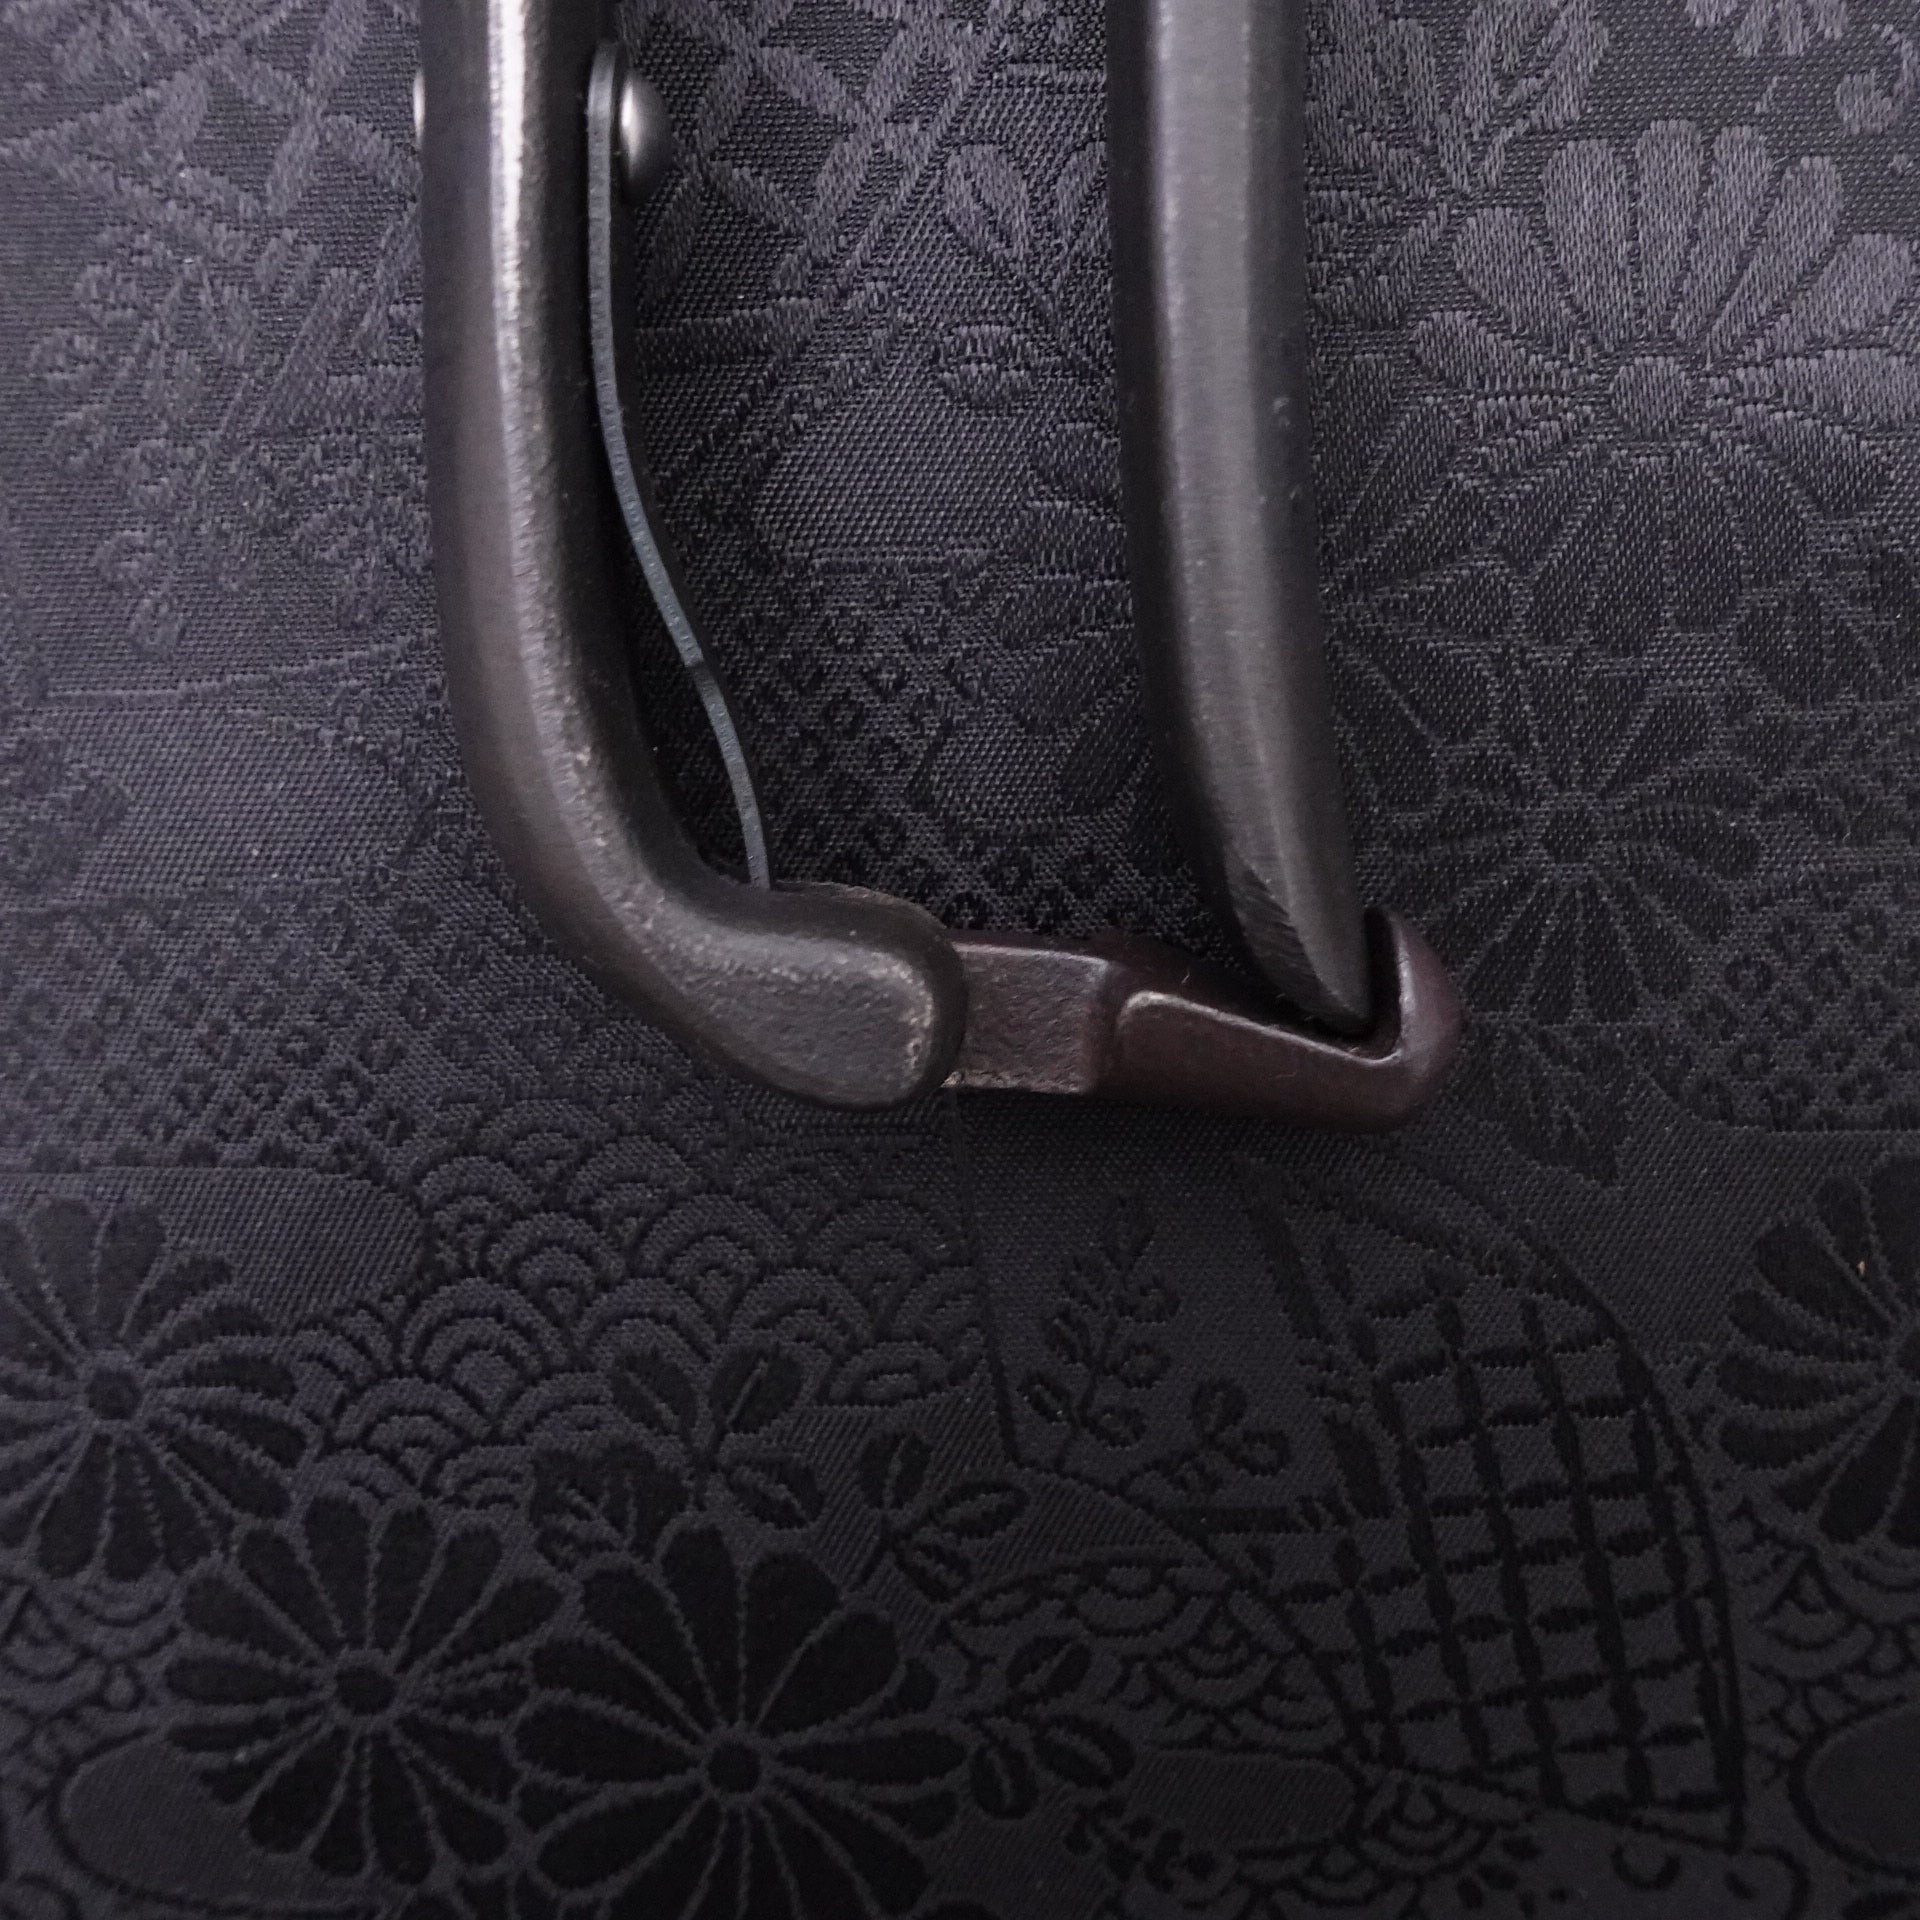 Black Musashi Pruning Shears / Garden Scissors A Type Forged Handmade 225mm